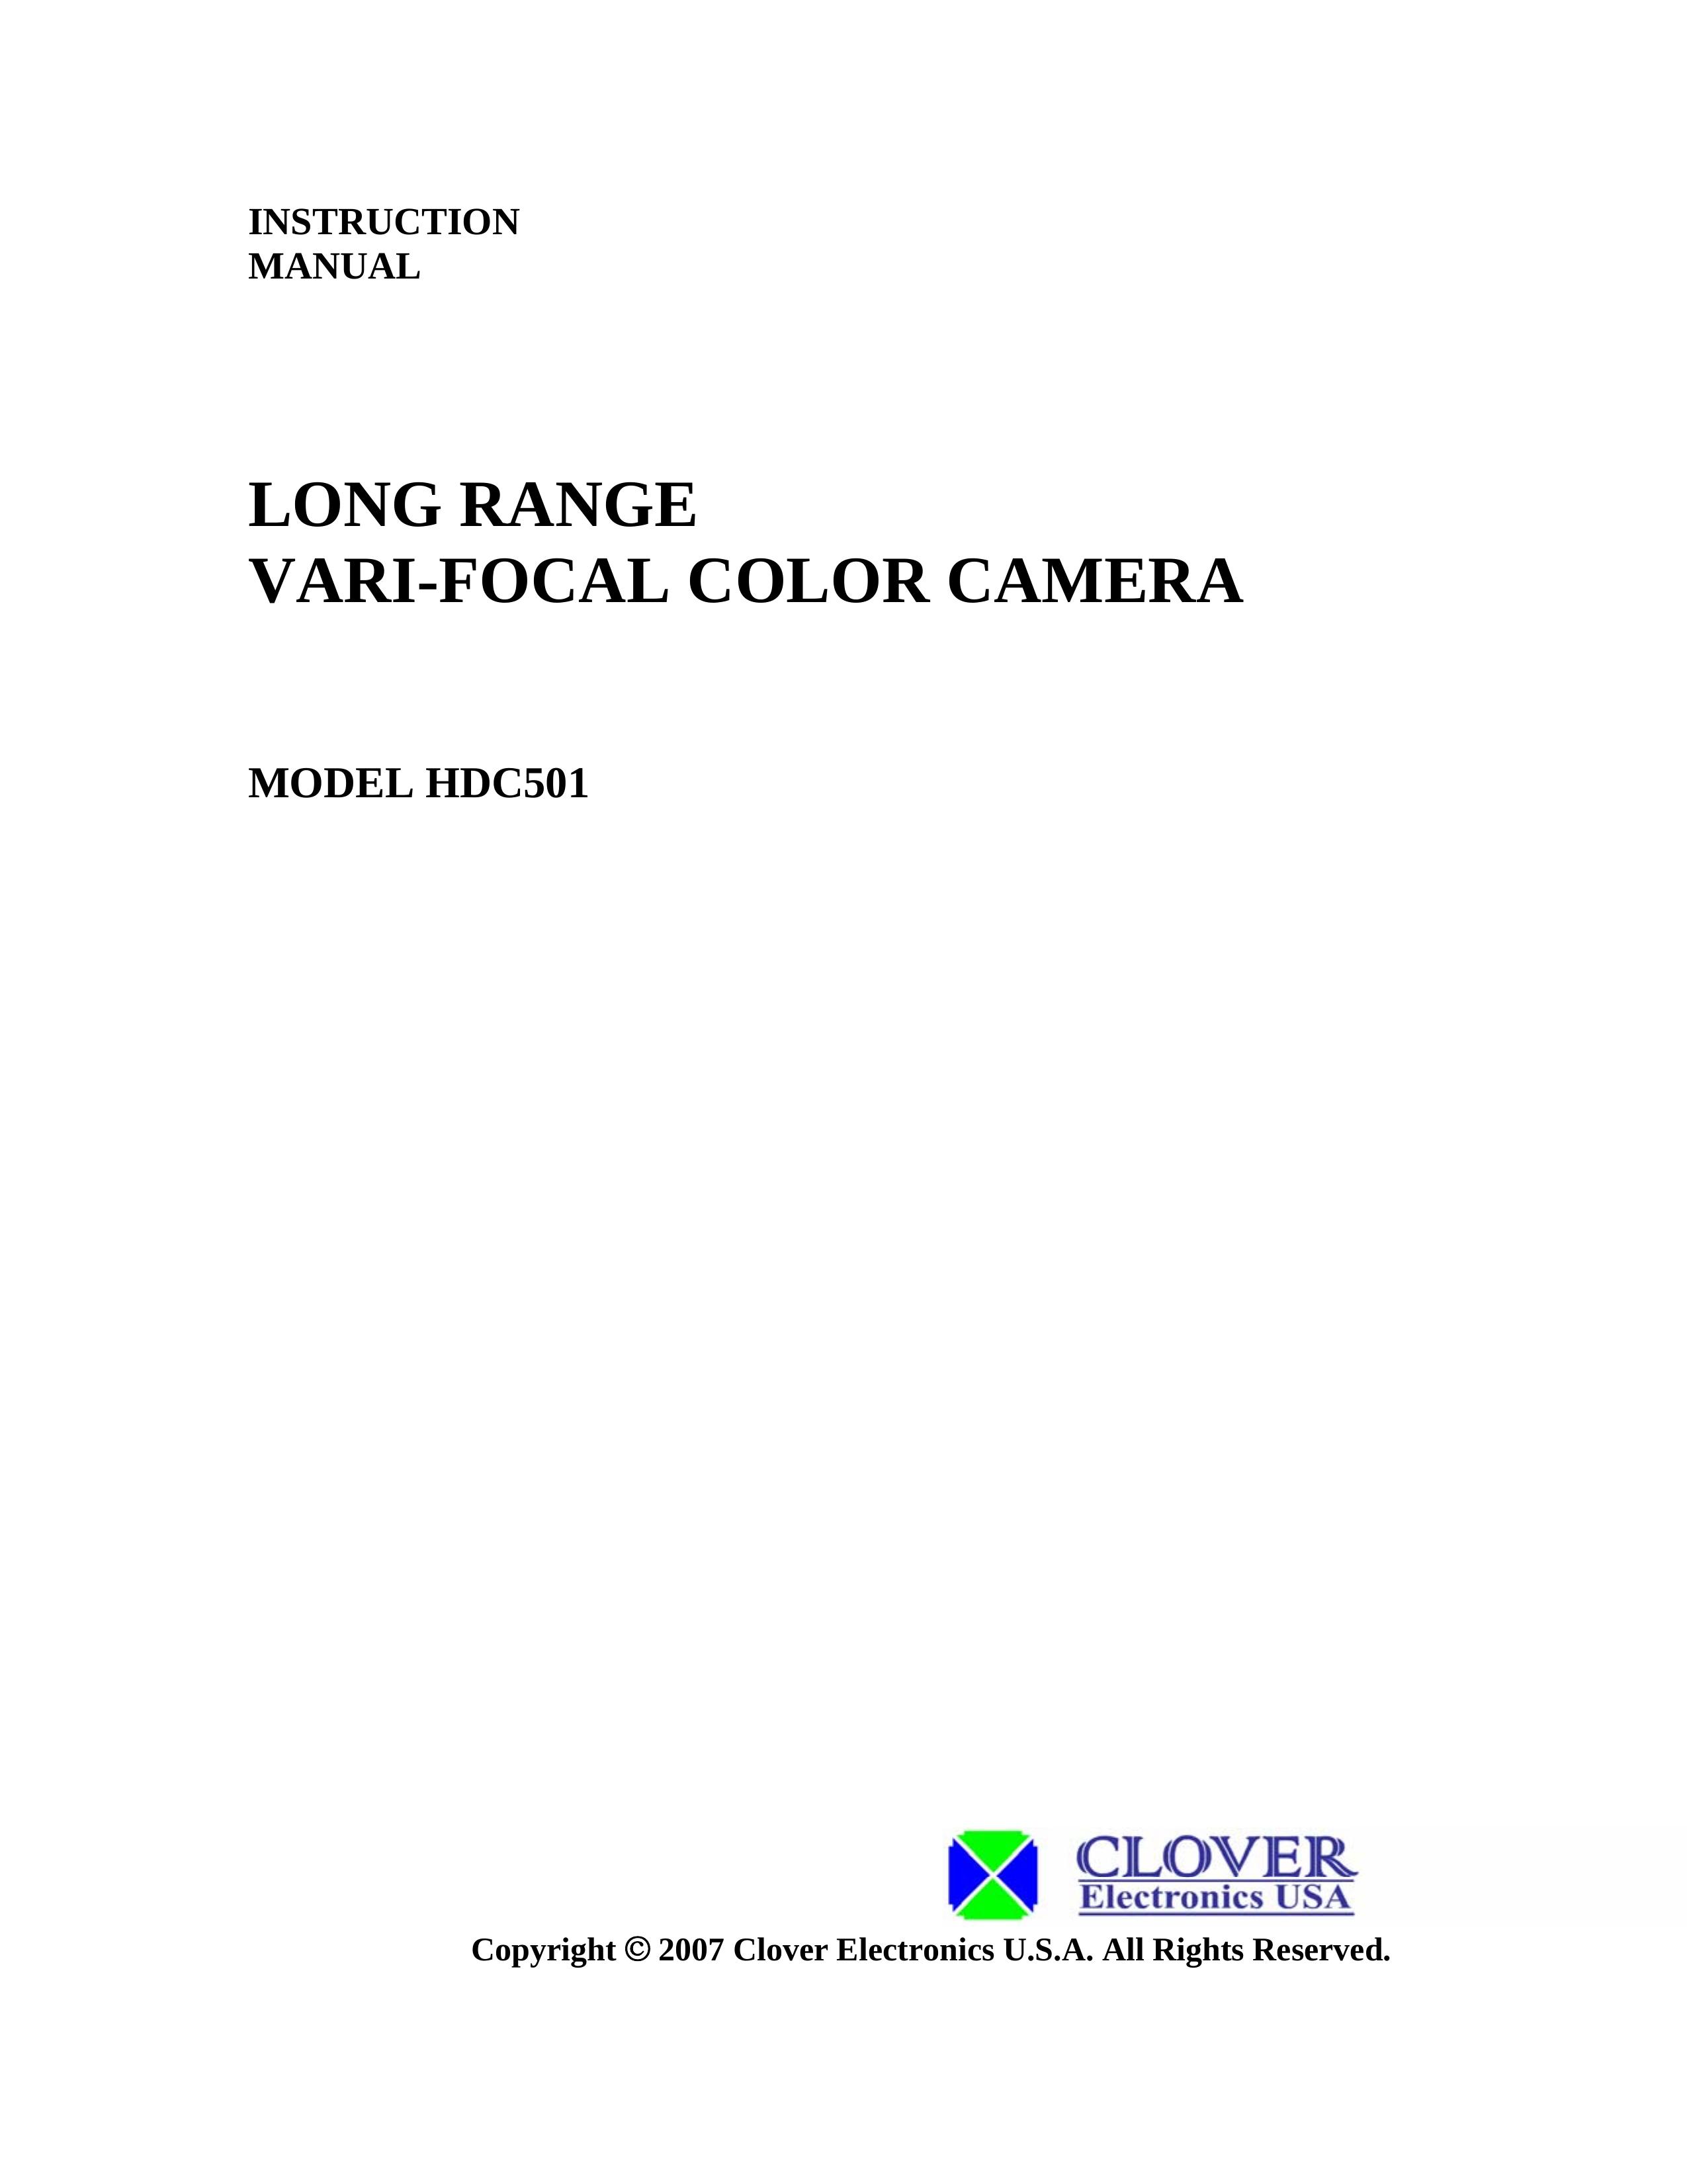 Clover Electronics HDC501 Digital Camera User Manual